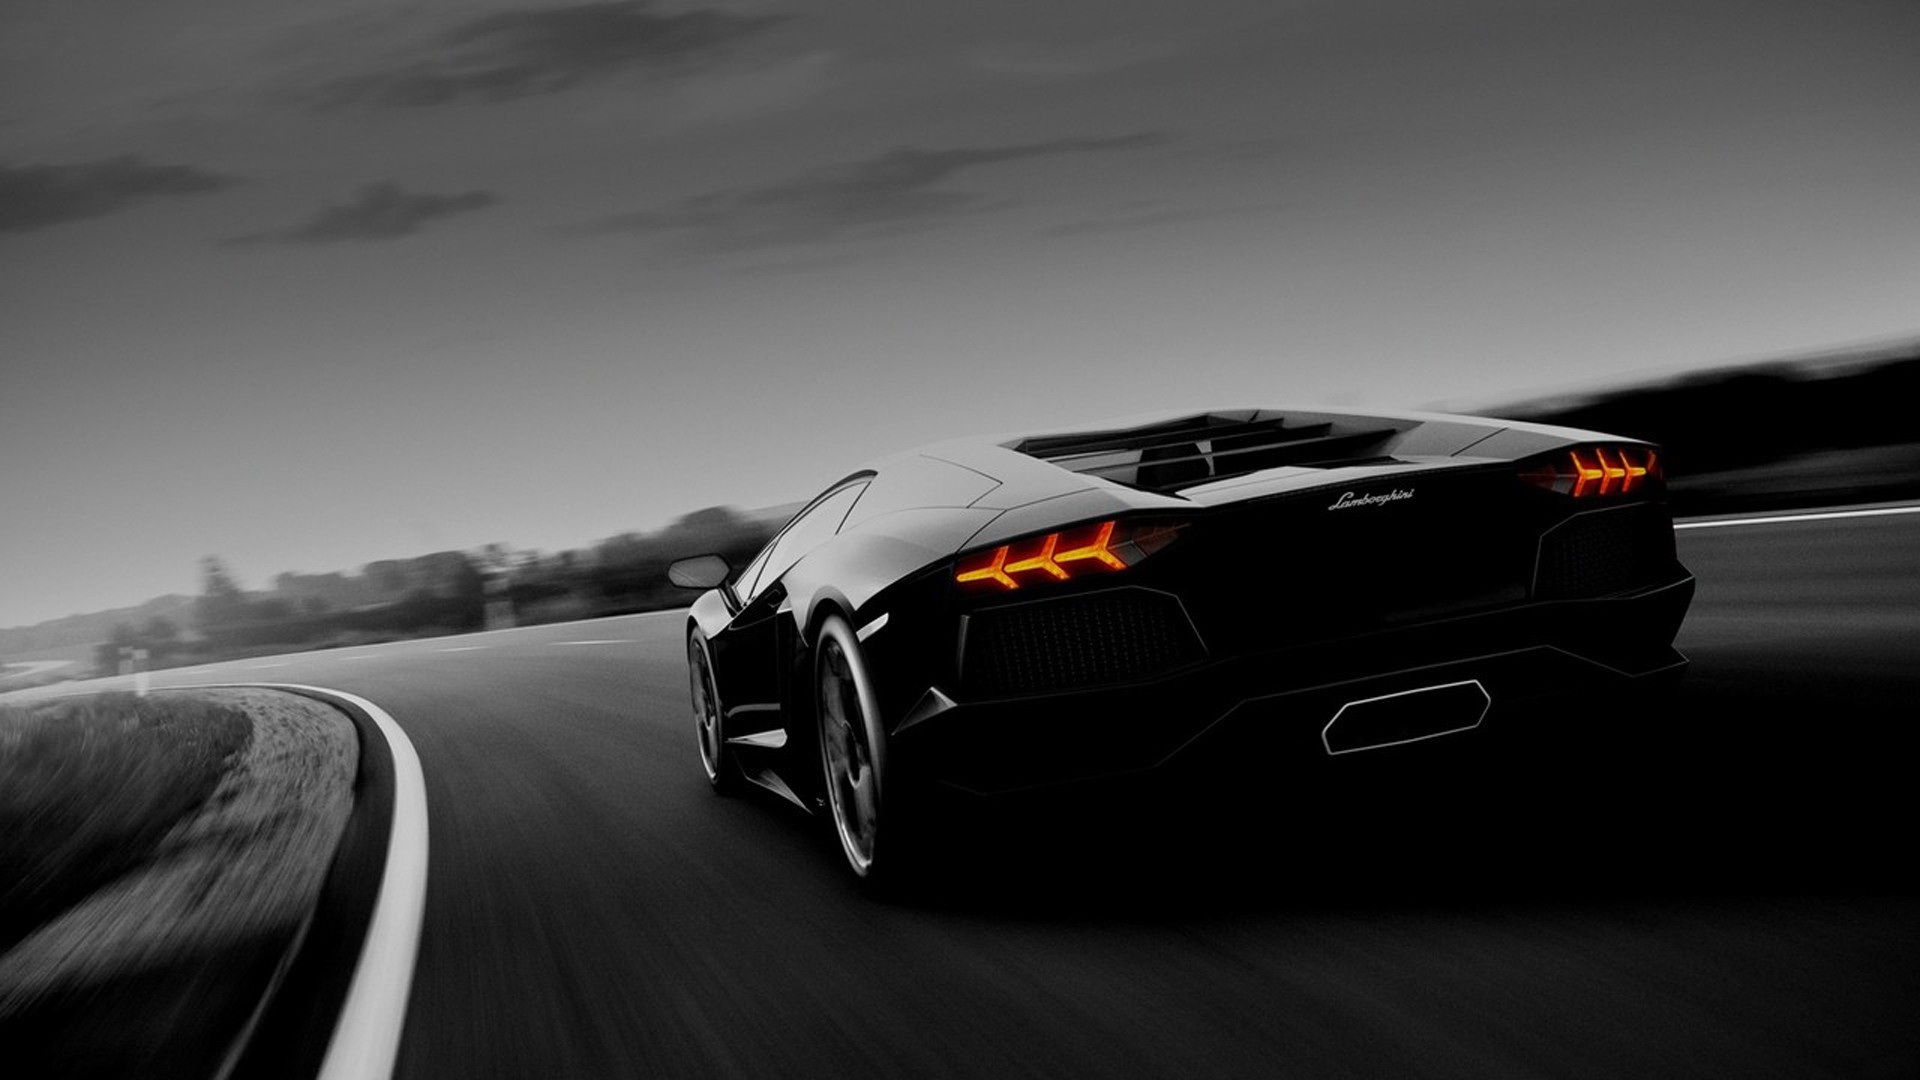  Black Lamborghini Murcielago Racing desktop PC and Mac wallpaper